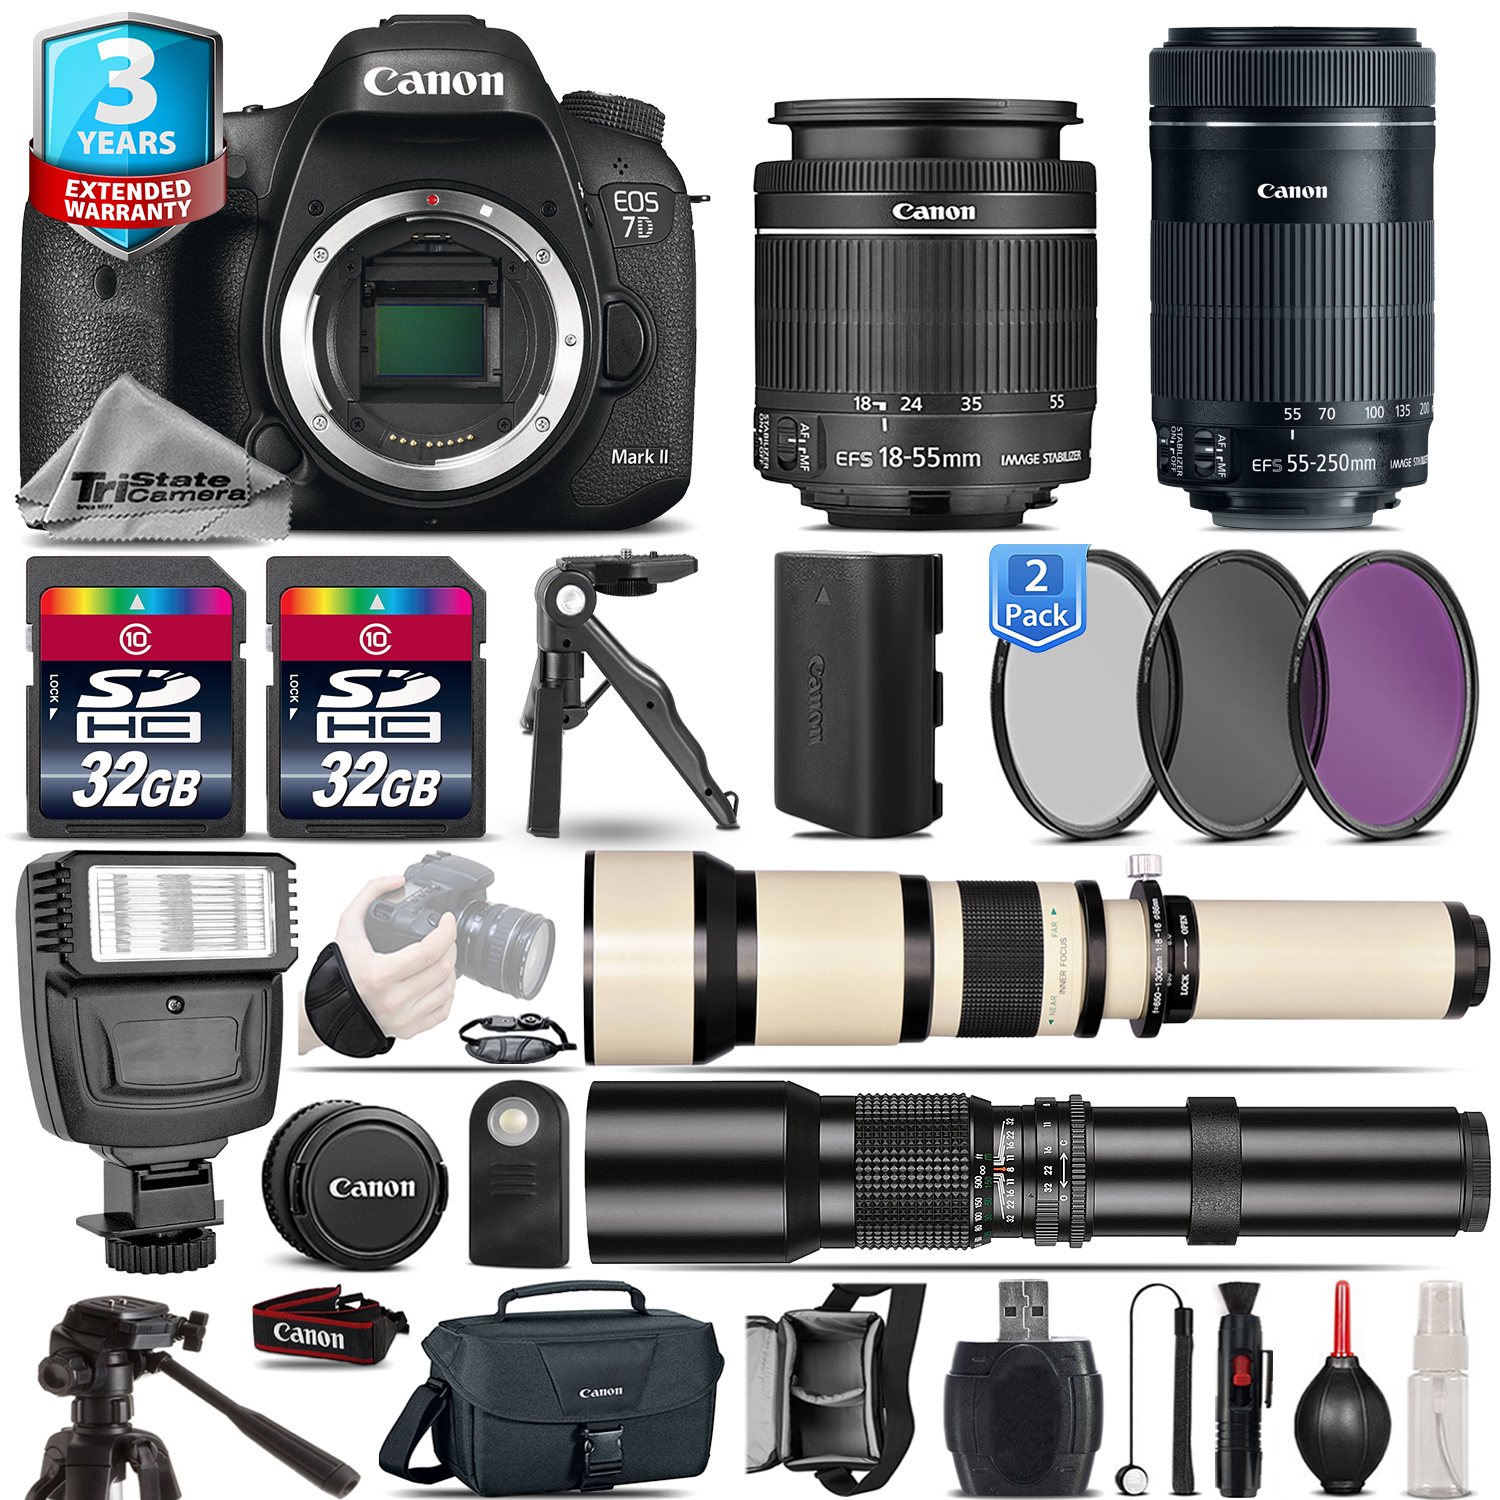 EOS 7D Mark II DSLR Camera + 18-55mm + 55-200mm + 3yr Warranty -64GB Kit *FREE SHIPPING*